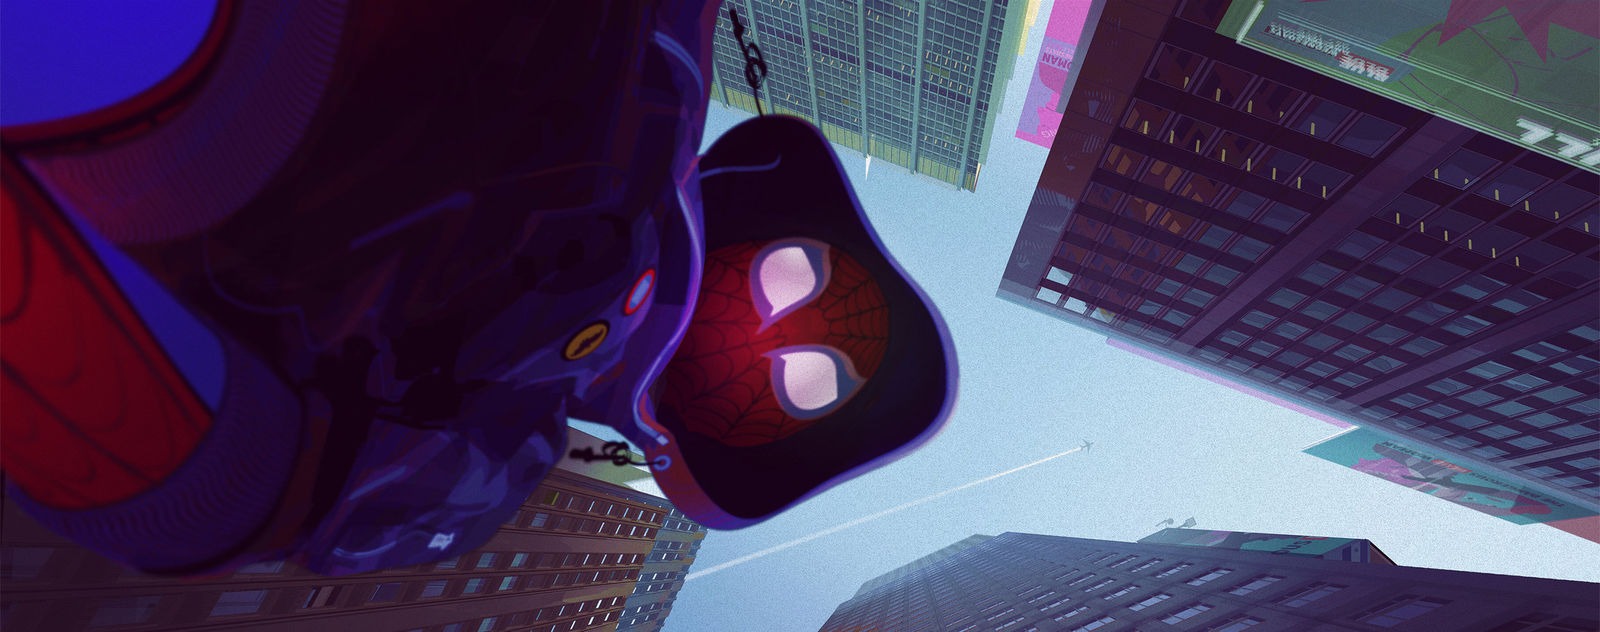 Spider-Man-Into-the-Spider-Verse-Concept-Art-Alberto-Mieglo-Keyframe-05.jpg